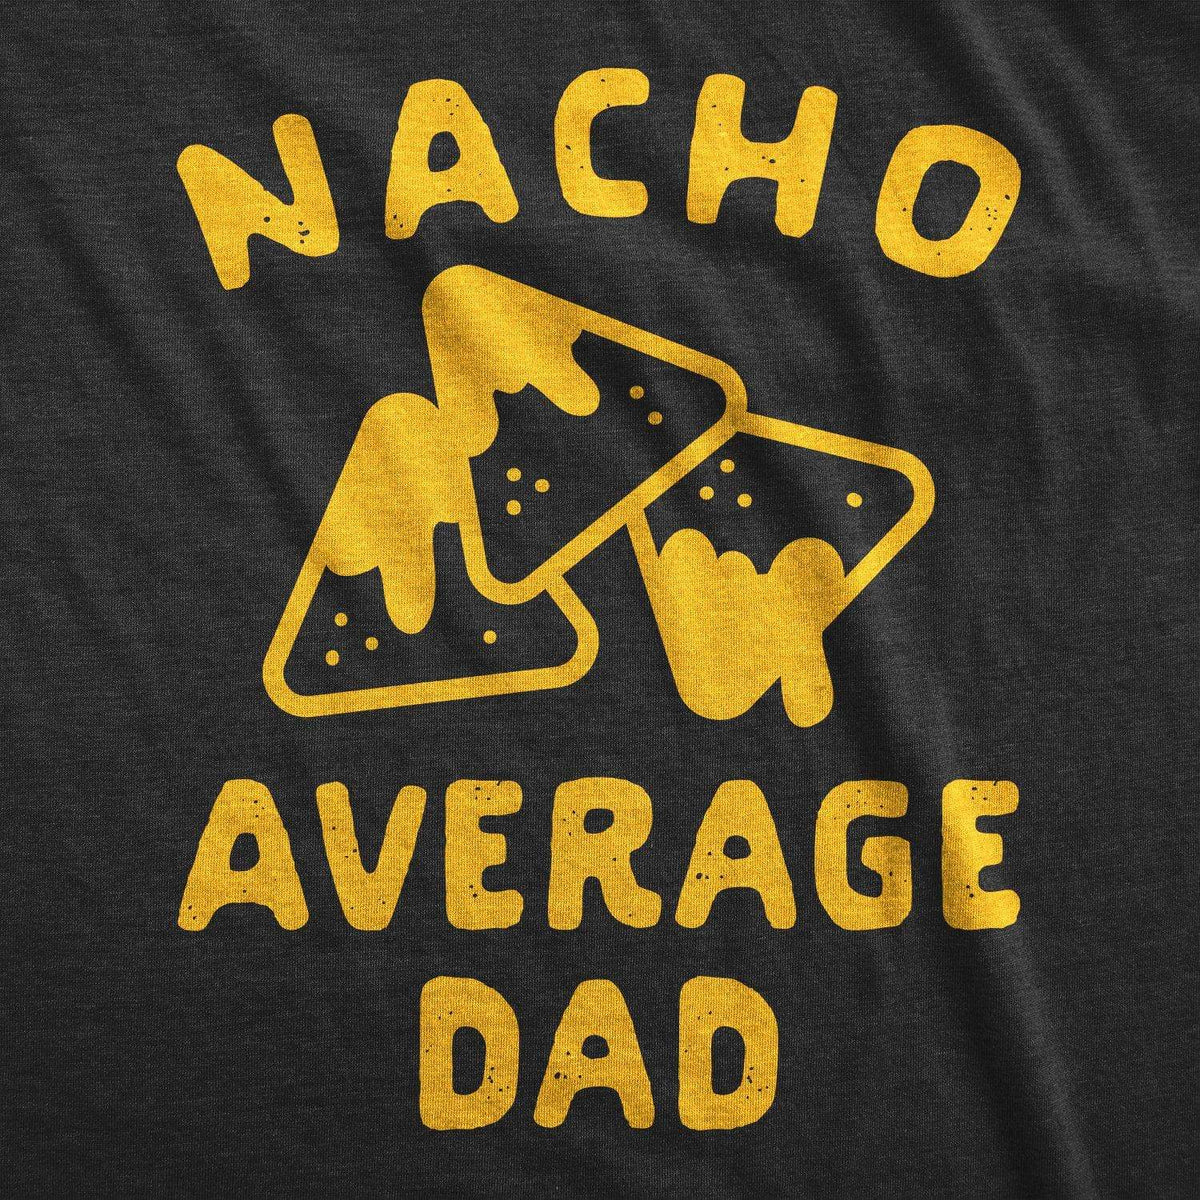 Nacho Average Dad Men&#39;s Tshirt - Crazy Dog T-Shirts